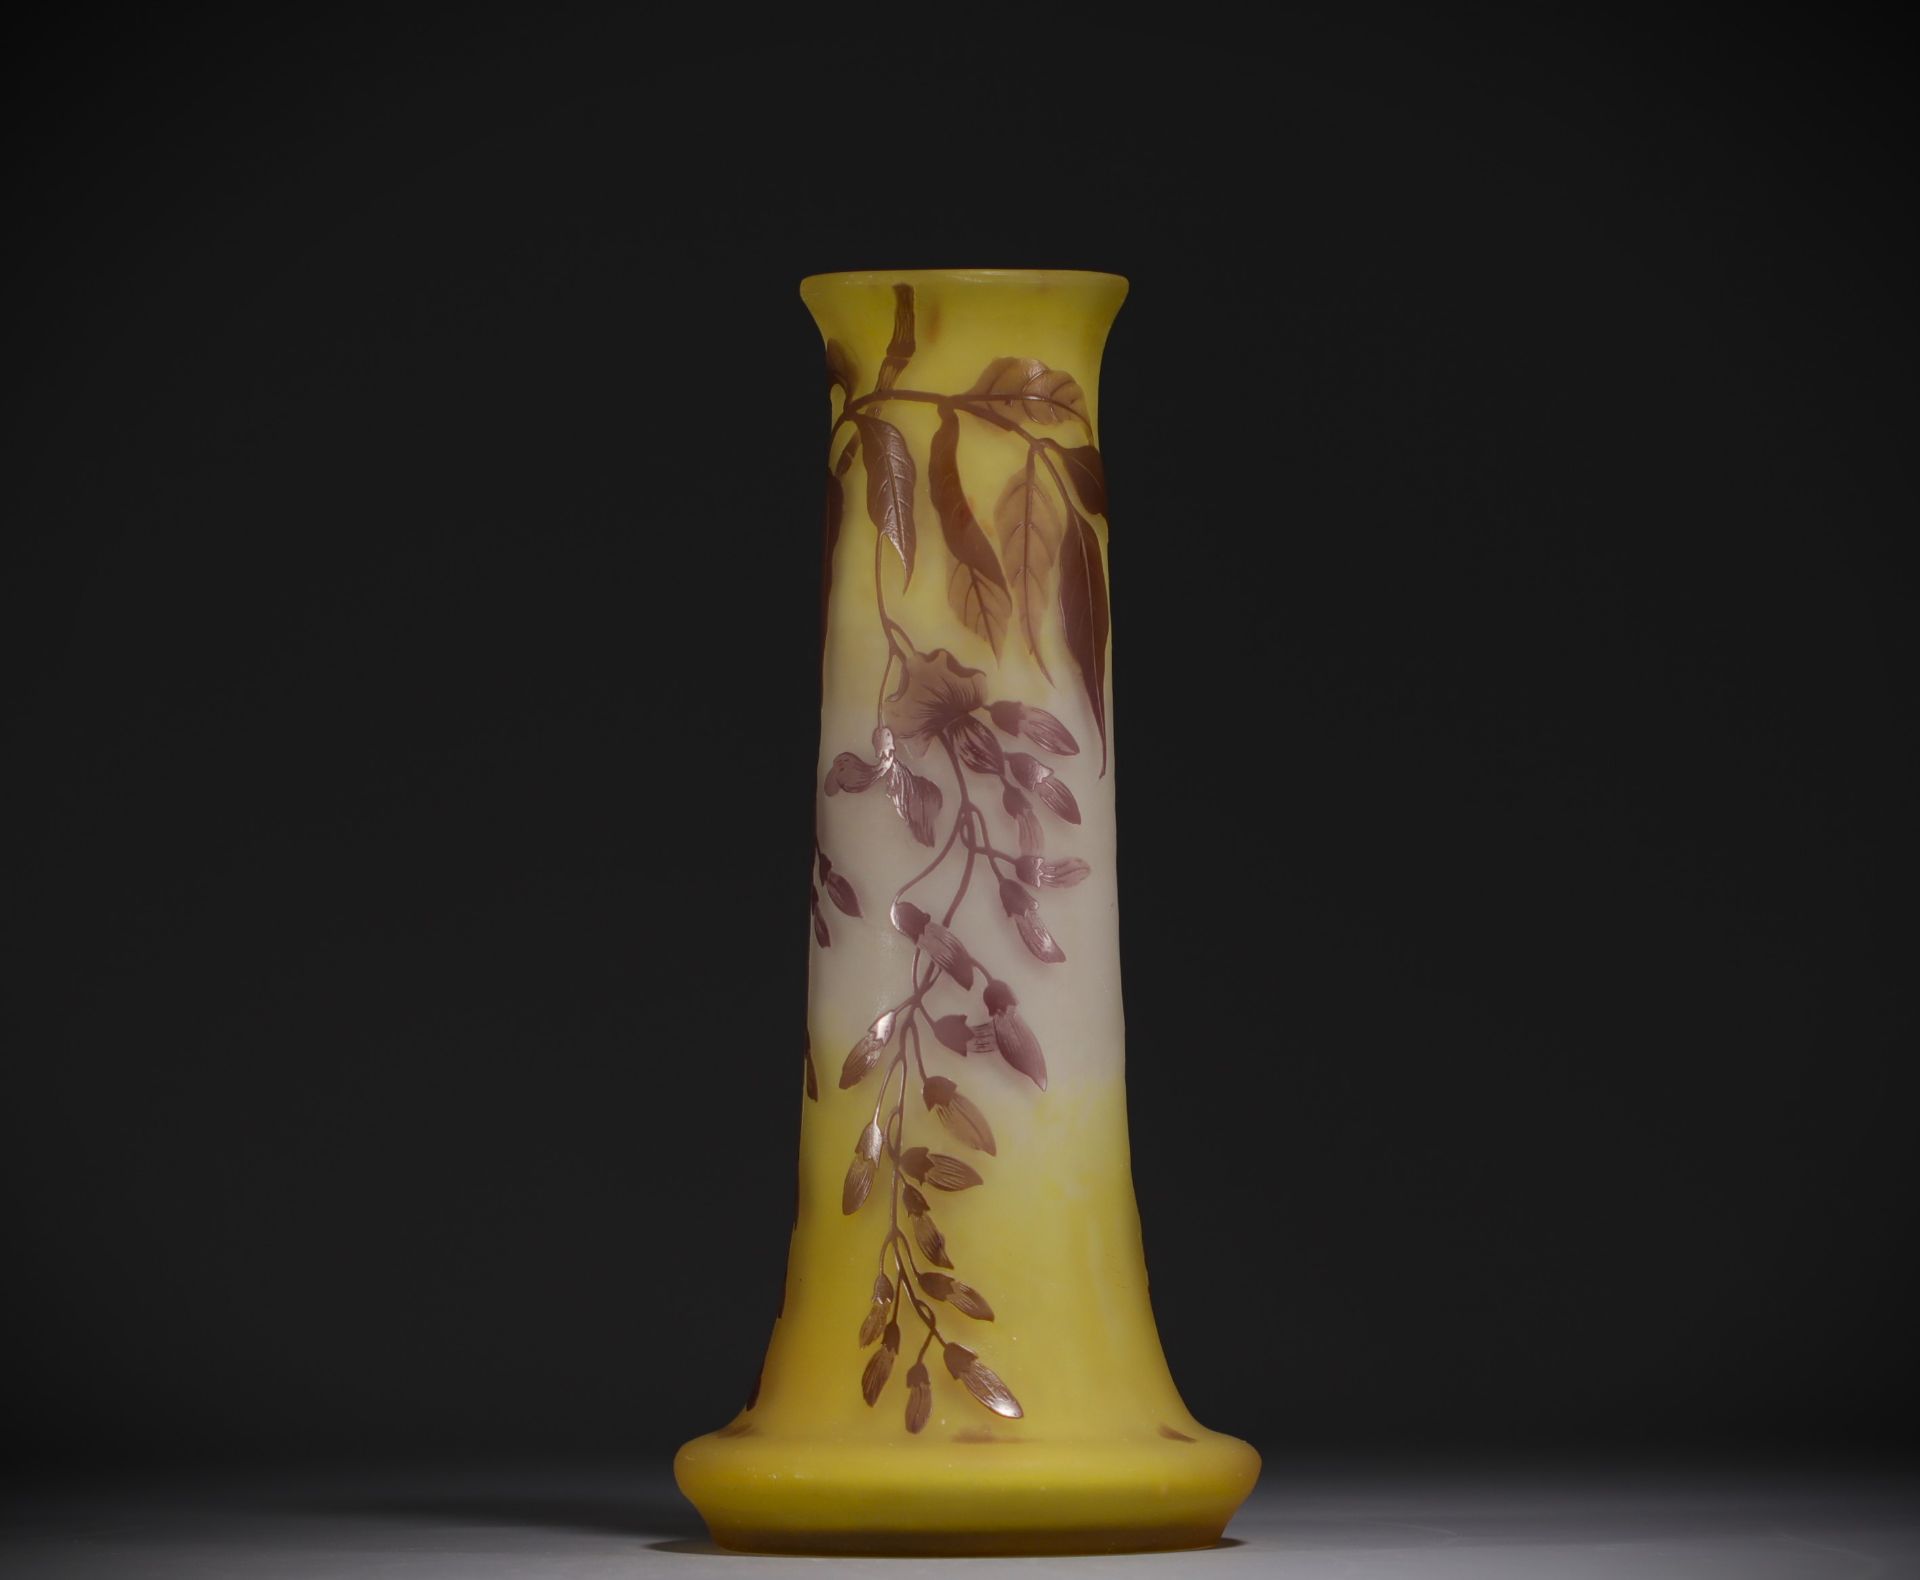 Emile GALLE (1846-1904) Large acid-etched multi-layered glass vase, wisteria design, signed.